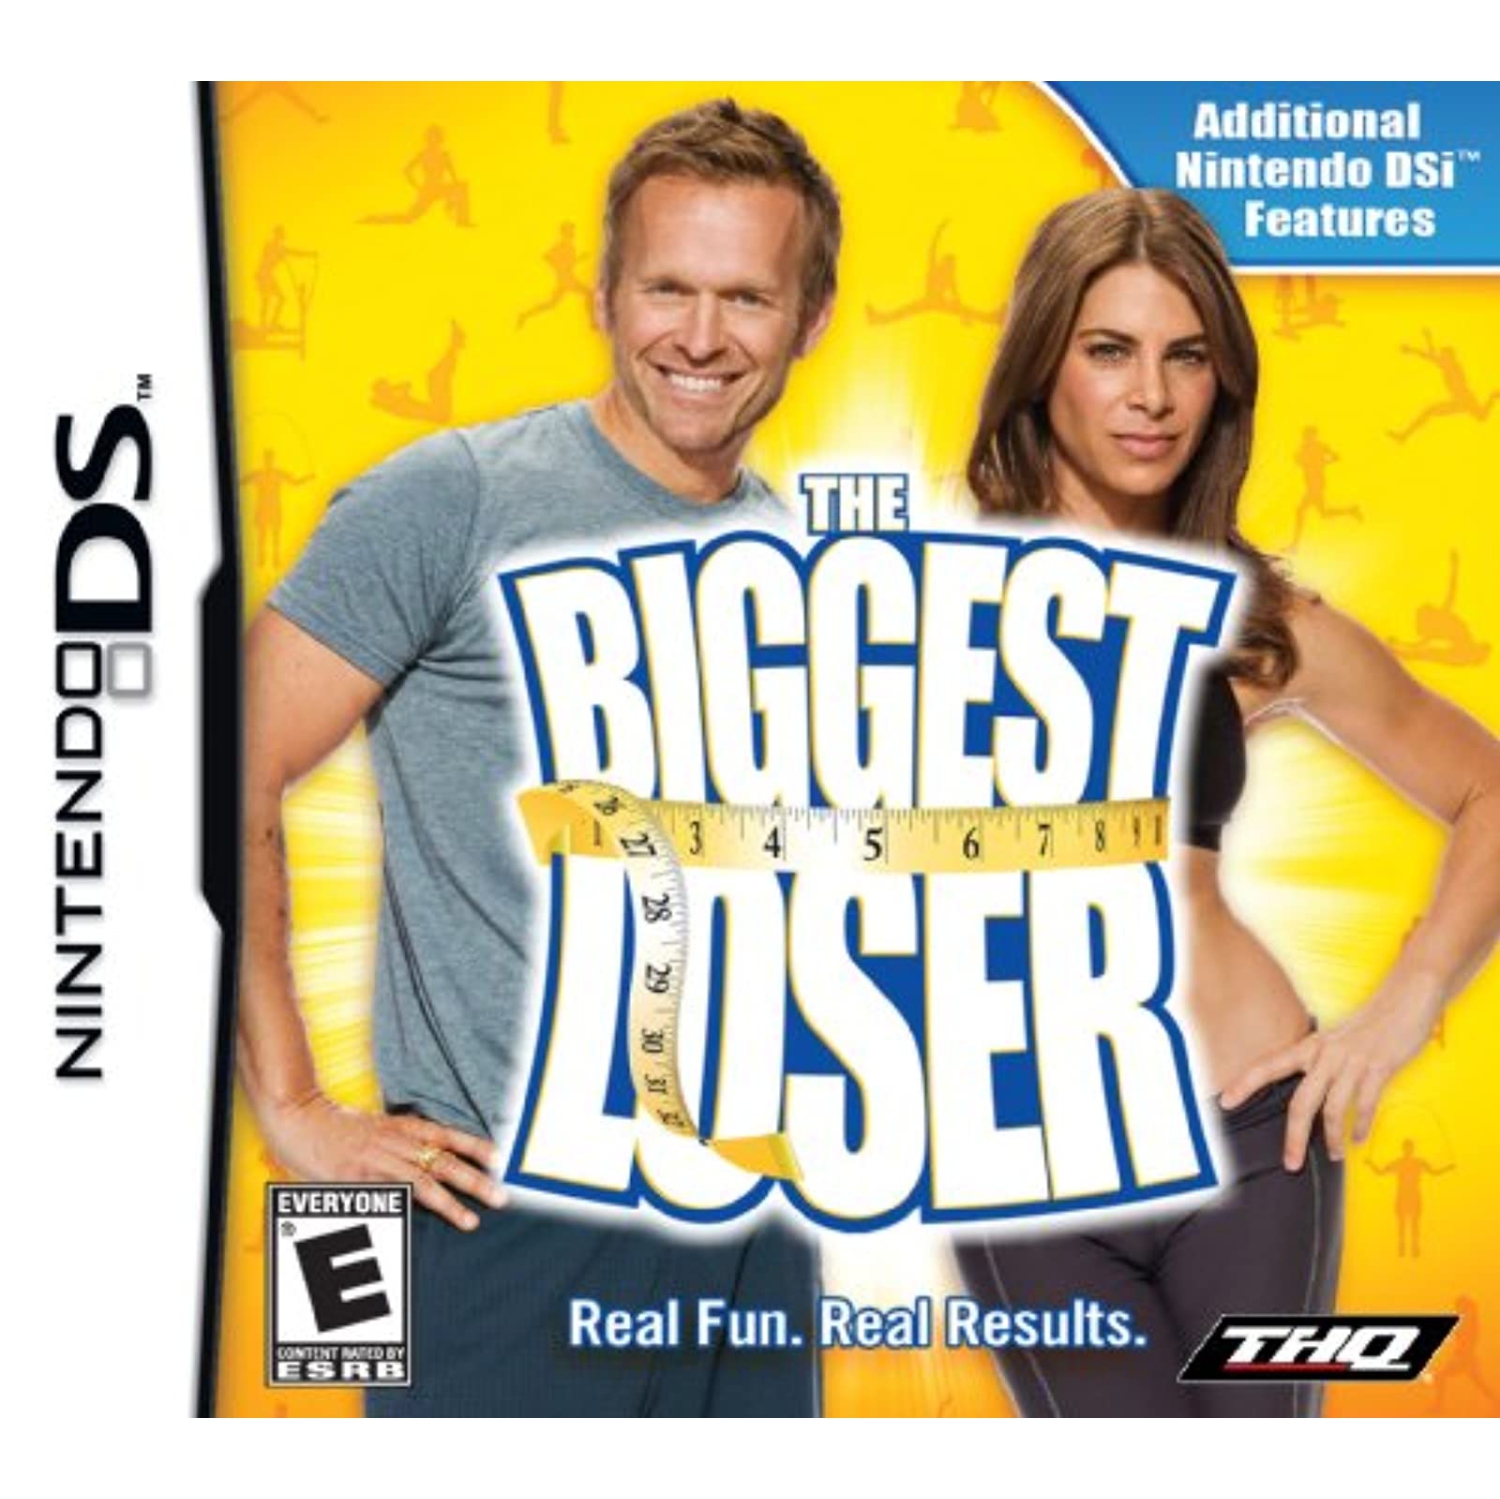 Biggest Loser For Nintendo DS DSi 3DS 2DS